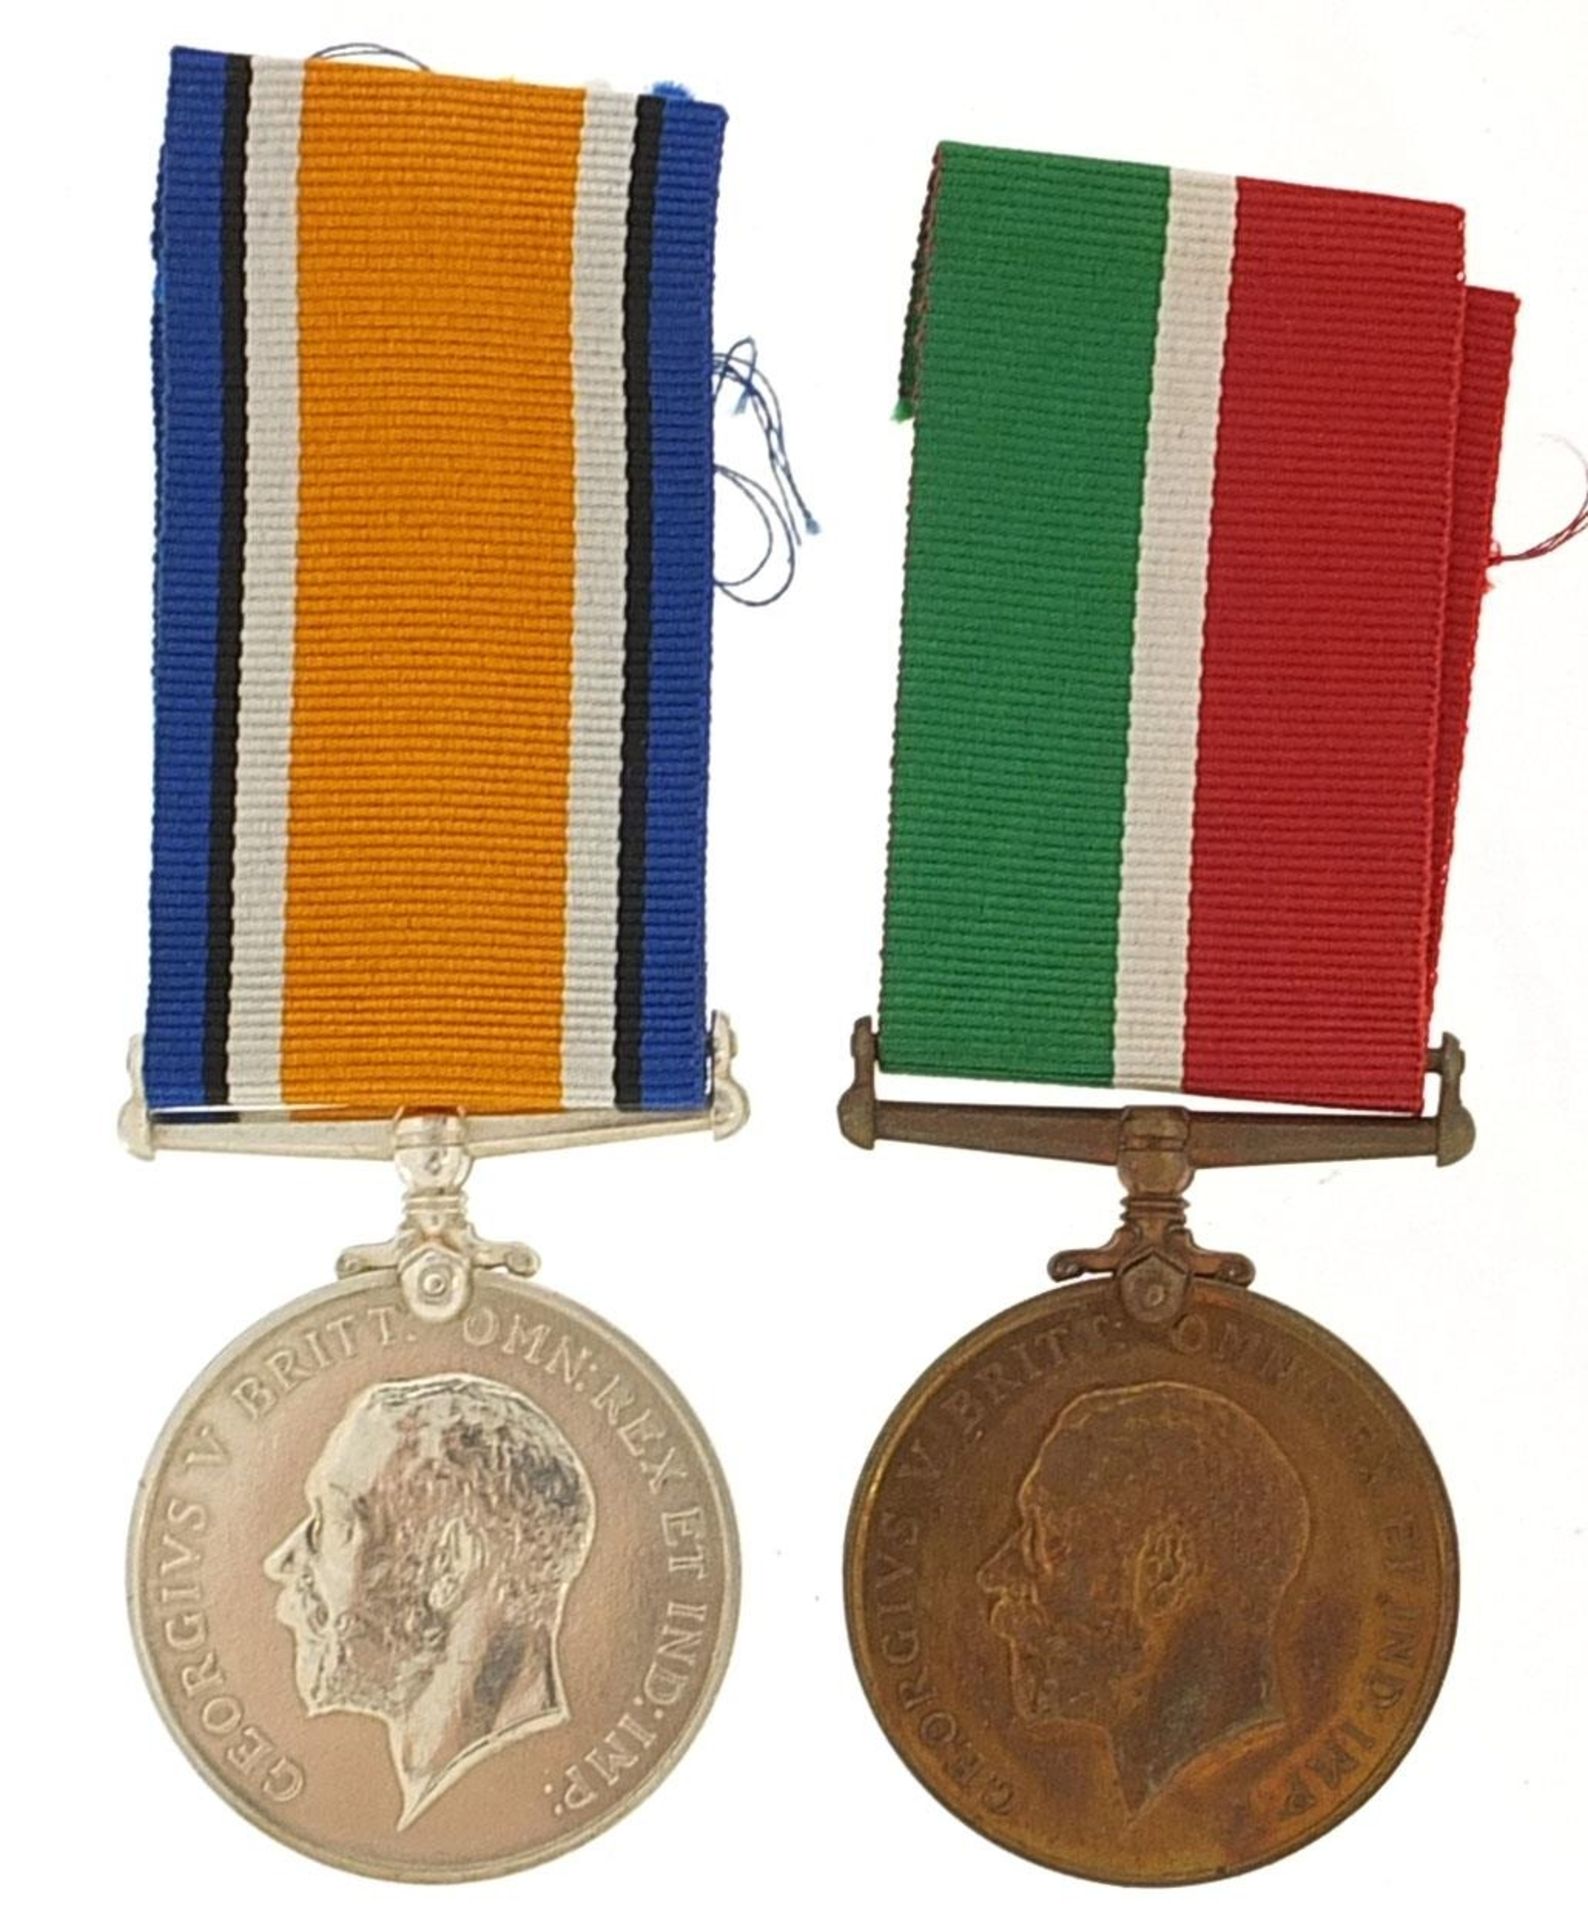 British military World War I pair awarded to Robert Walker - Image 3 of 6